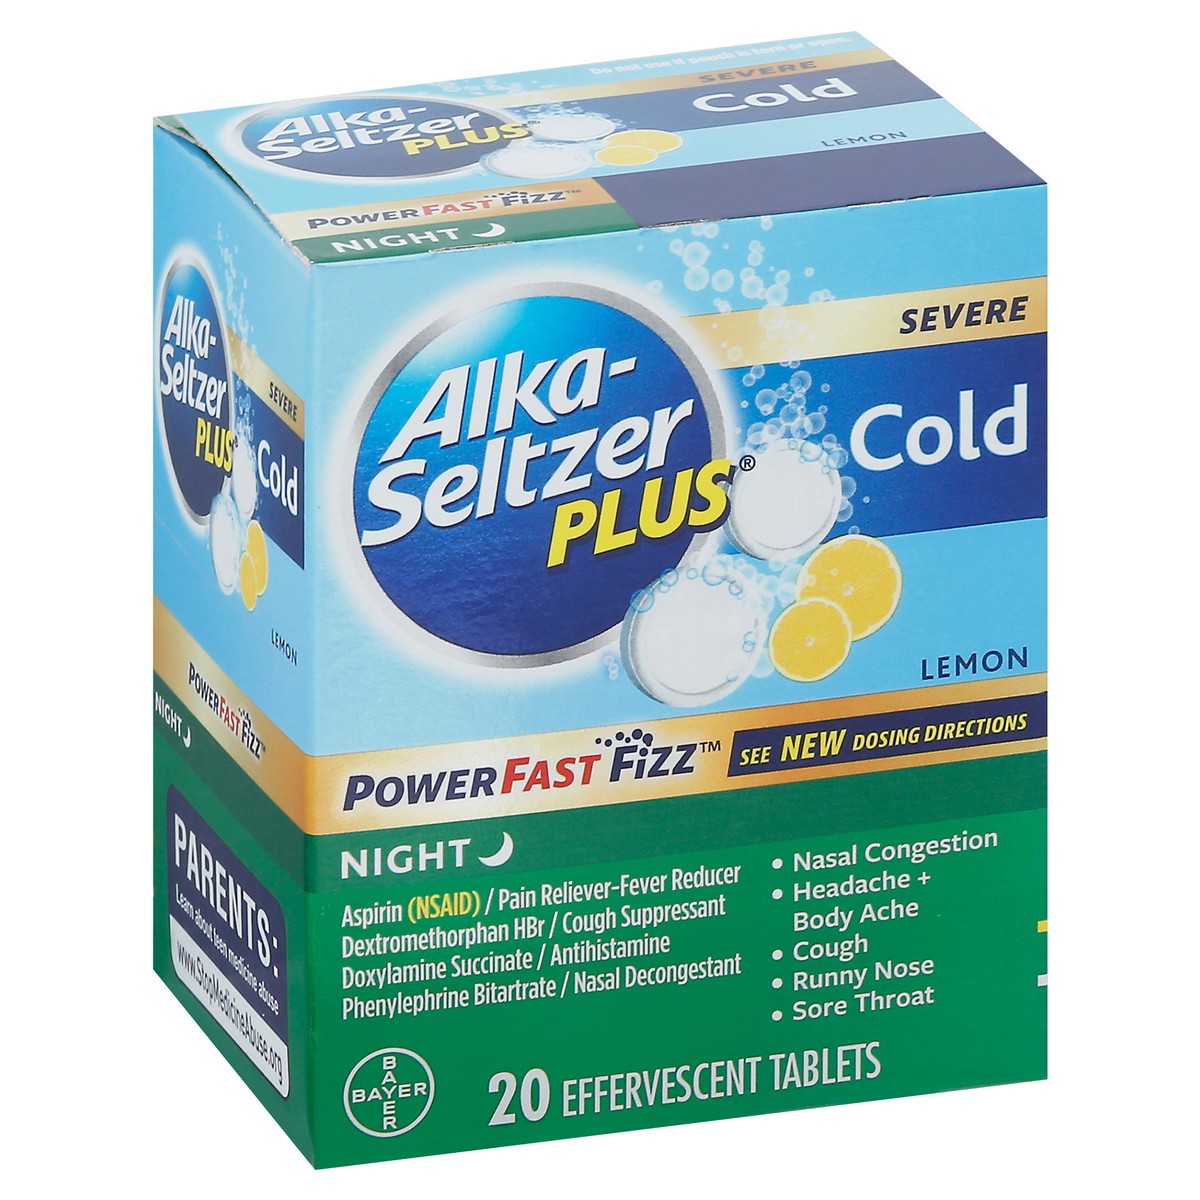 slide 2 of 9, Alka-Seltzer Plus Effervescent Powerfast Fizz Tablets Nighttime Cold Severe, Lemon Flavor, 20 ct